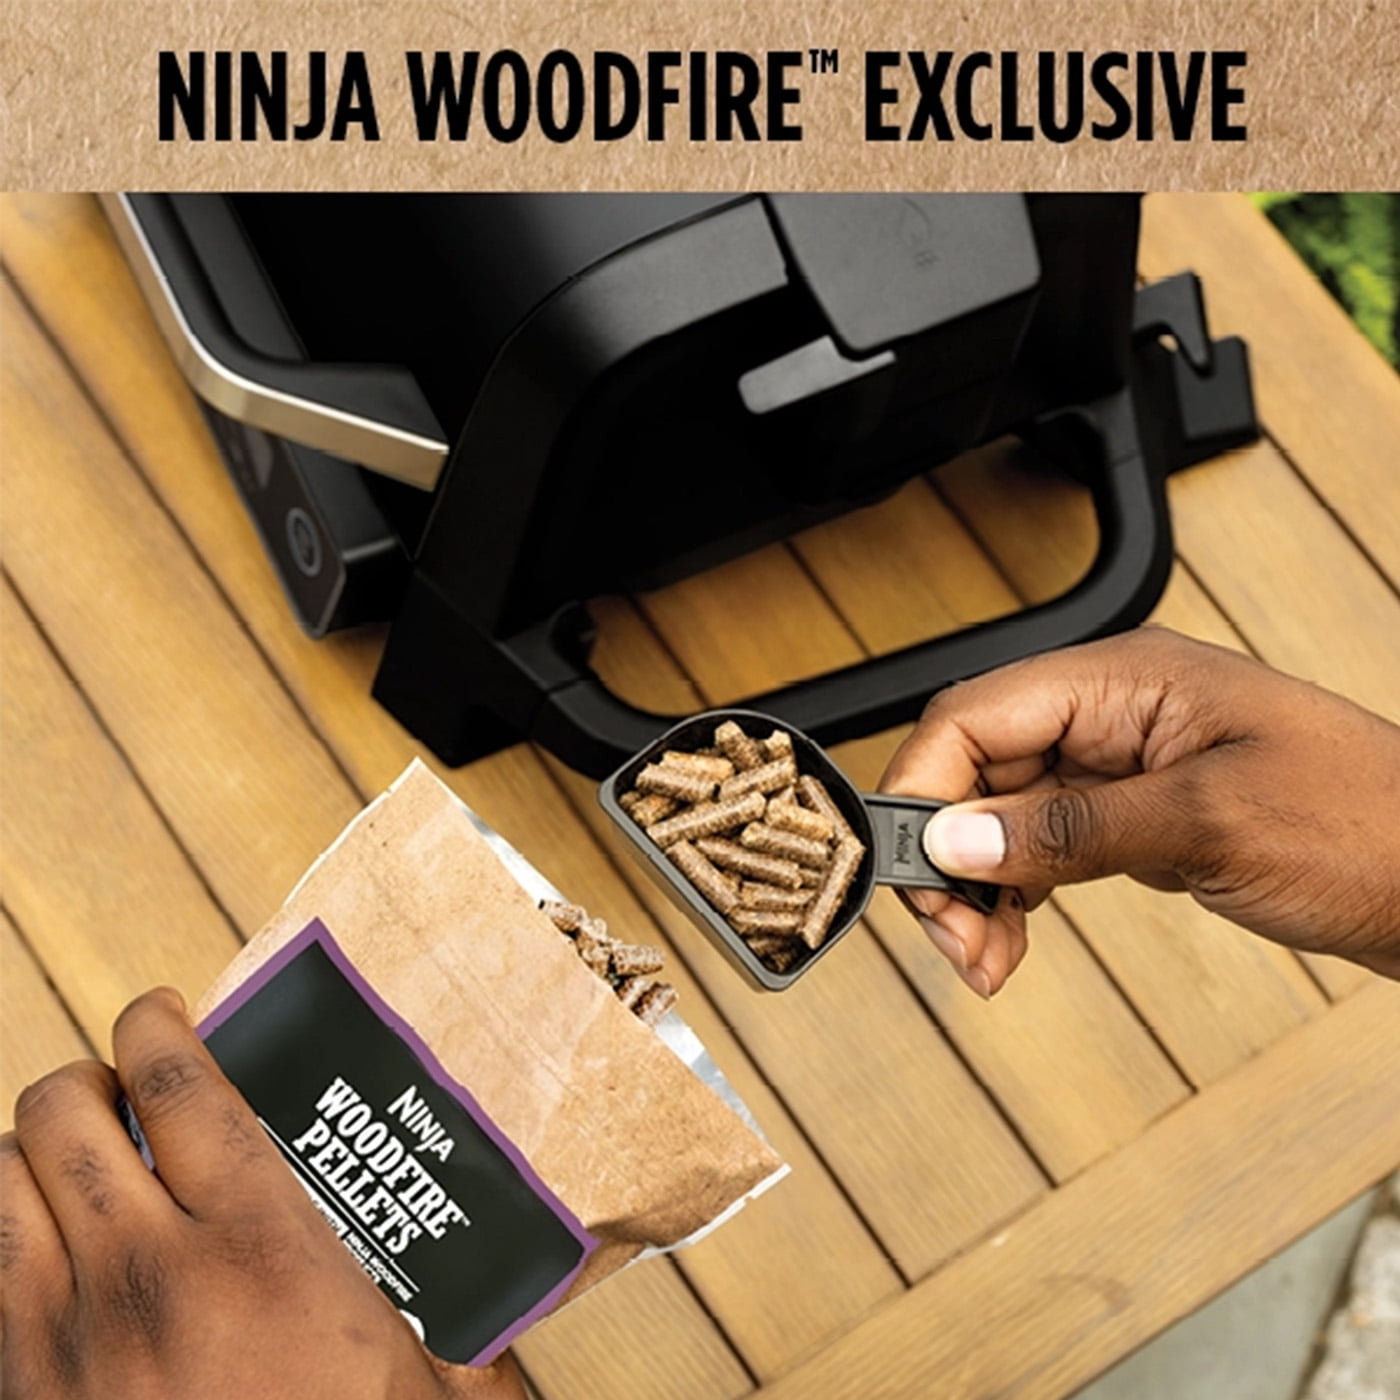 Ninja OG701 Woodfire Outdoor Grill & Smoker, 7-in-1 Master Grill, BBQ  Smoker, & Air Fryer plus Bake, Roast, Dehydrate, & Broil, uses Ninja  Woodfire